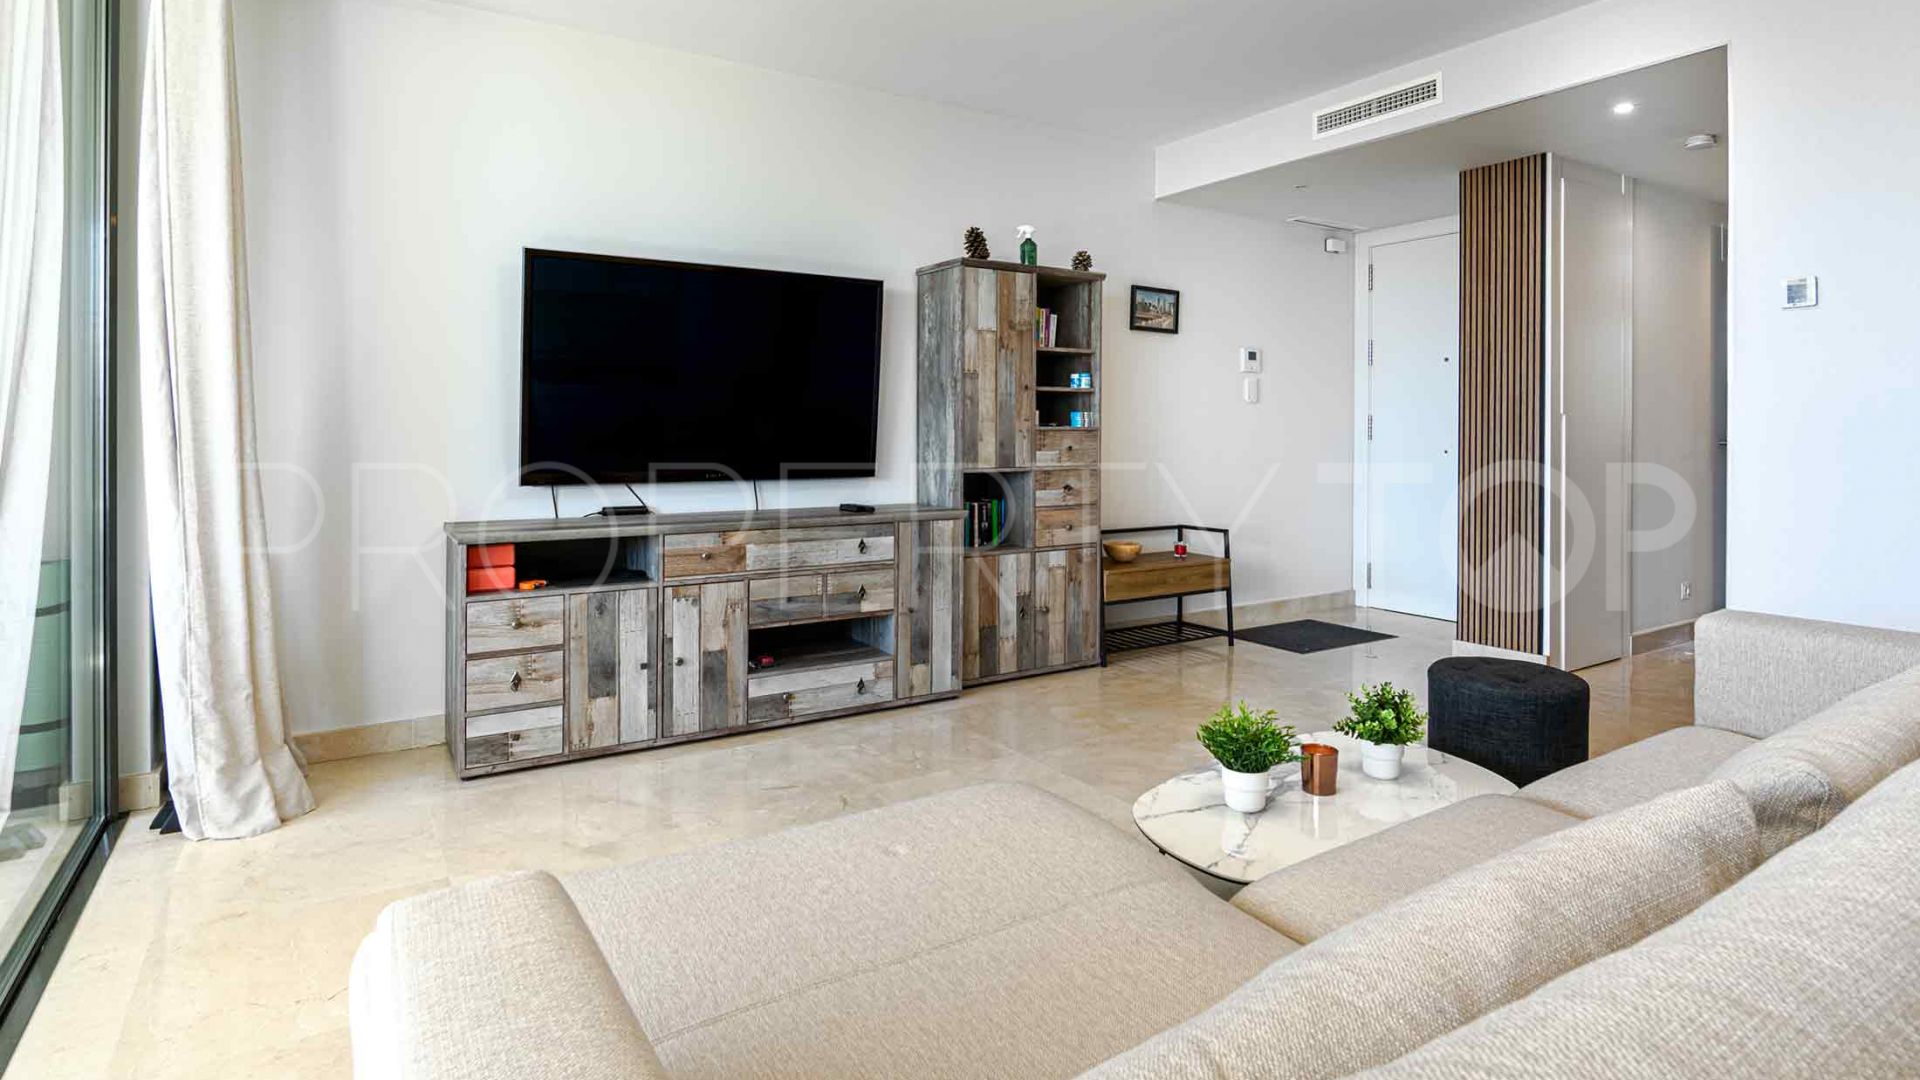 La Montesa de Marbella 2 bedrooms ground floor apartment for sale